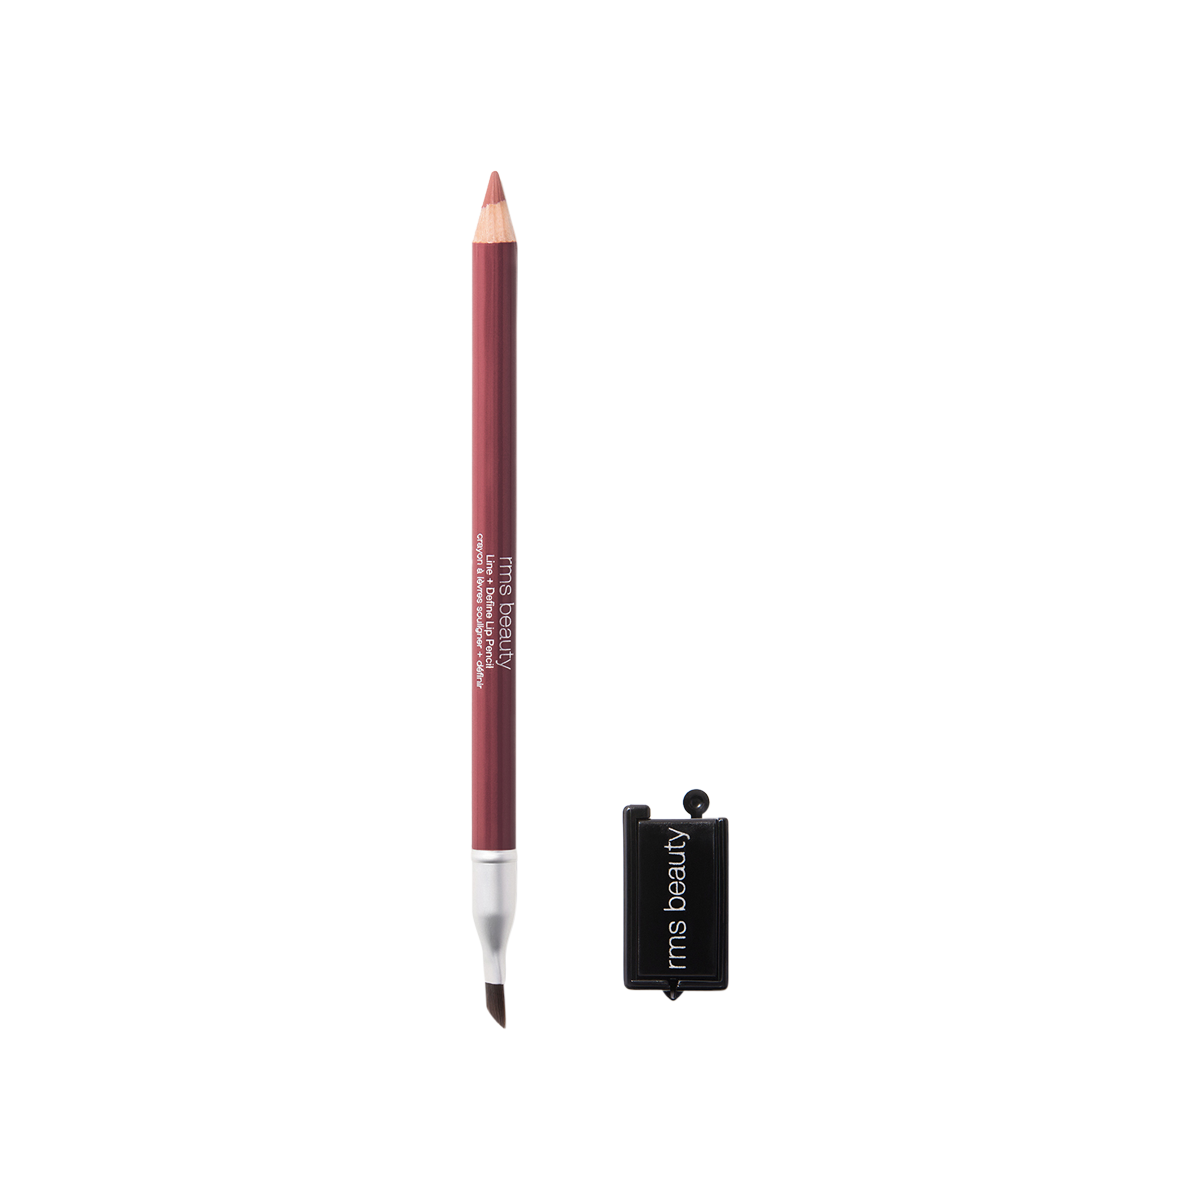 RMS Beauty - Go Nude Lip Pencil